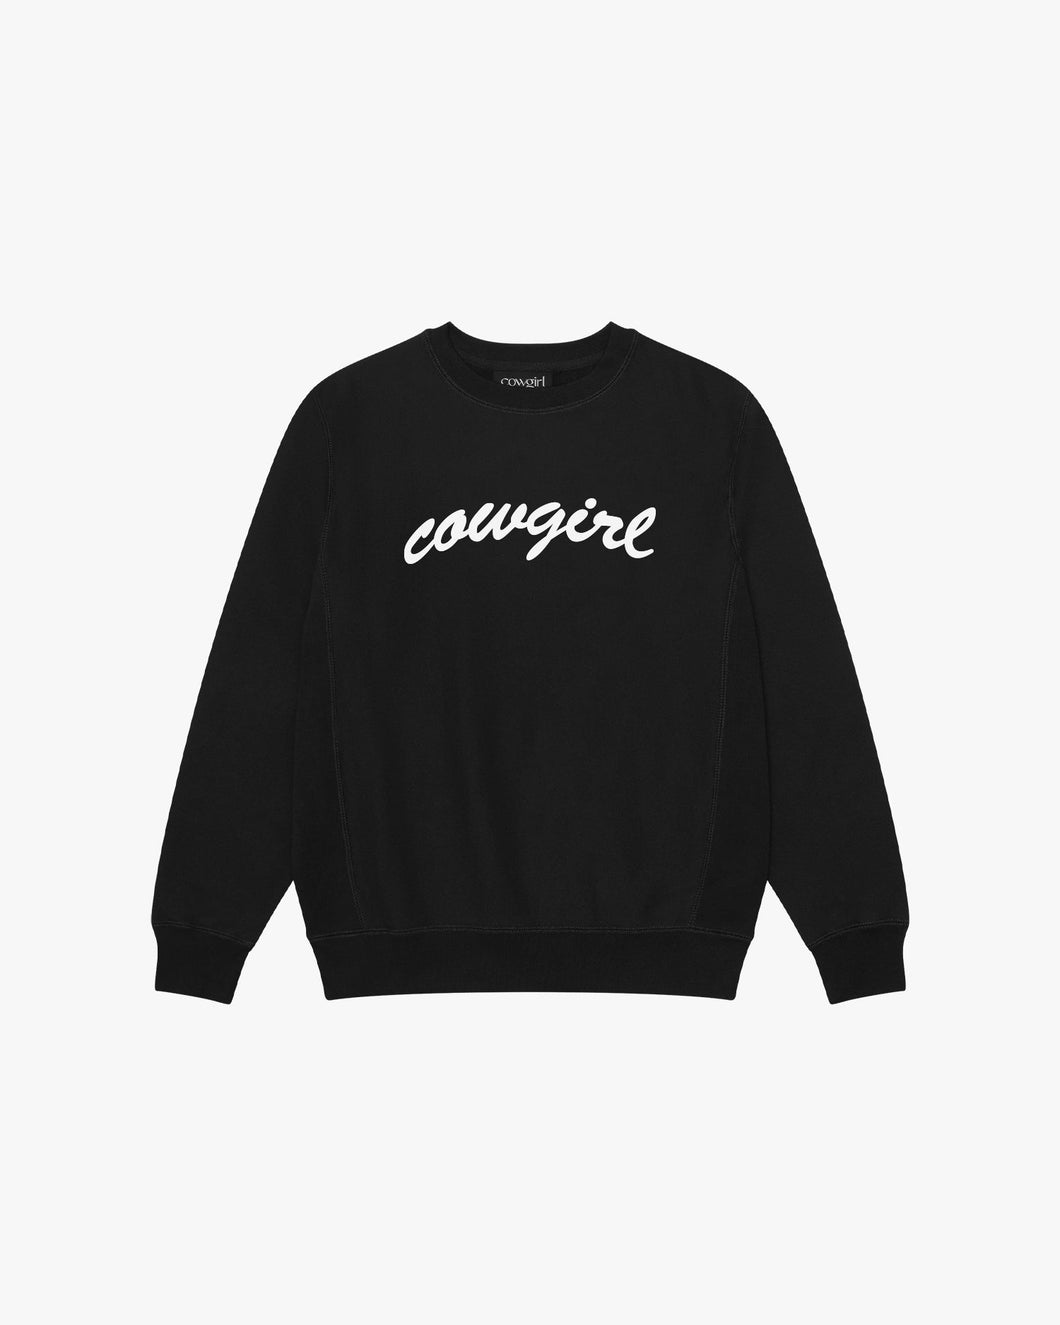 Cowgirl Big Script Sweatshirt (Black, SMALL)